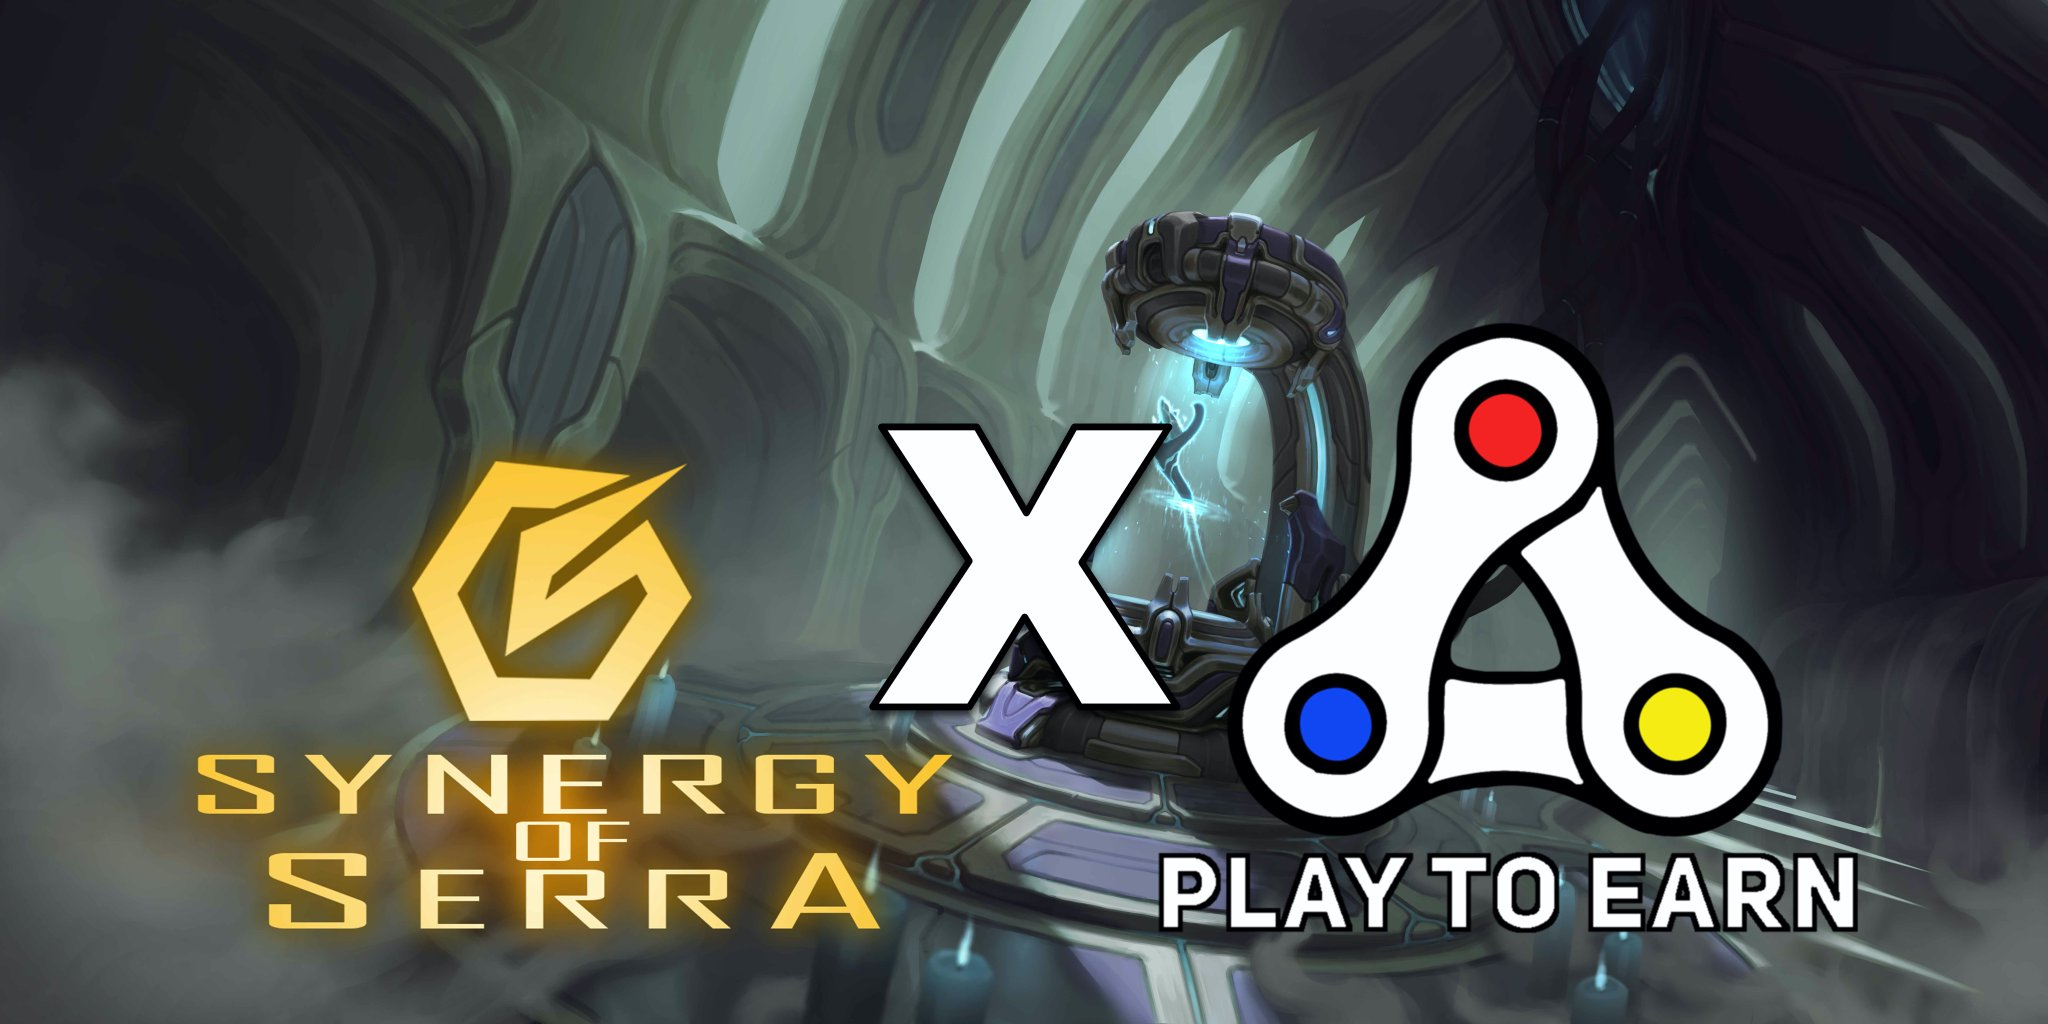 Play to earn x Synergy of Serra partnership